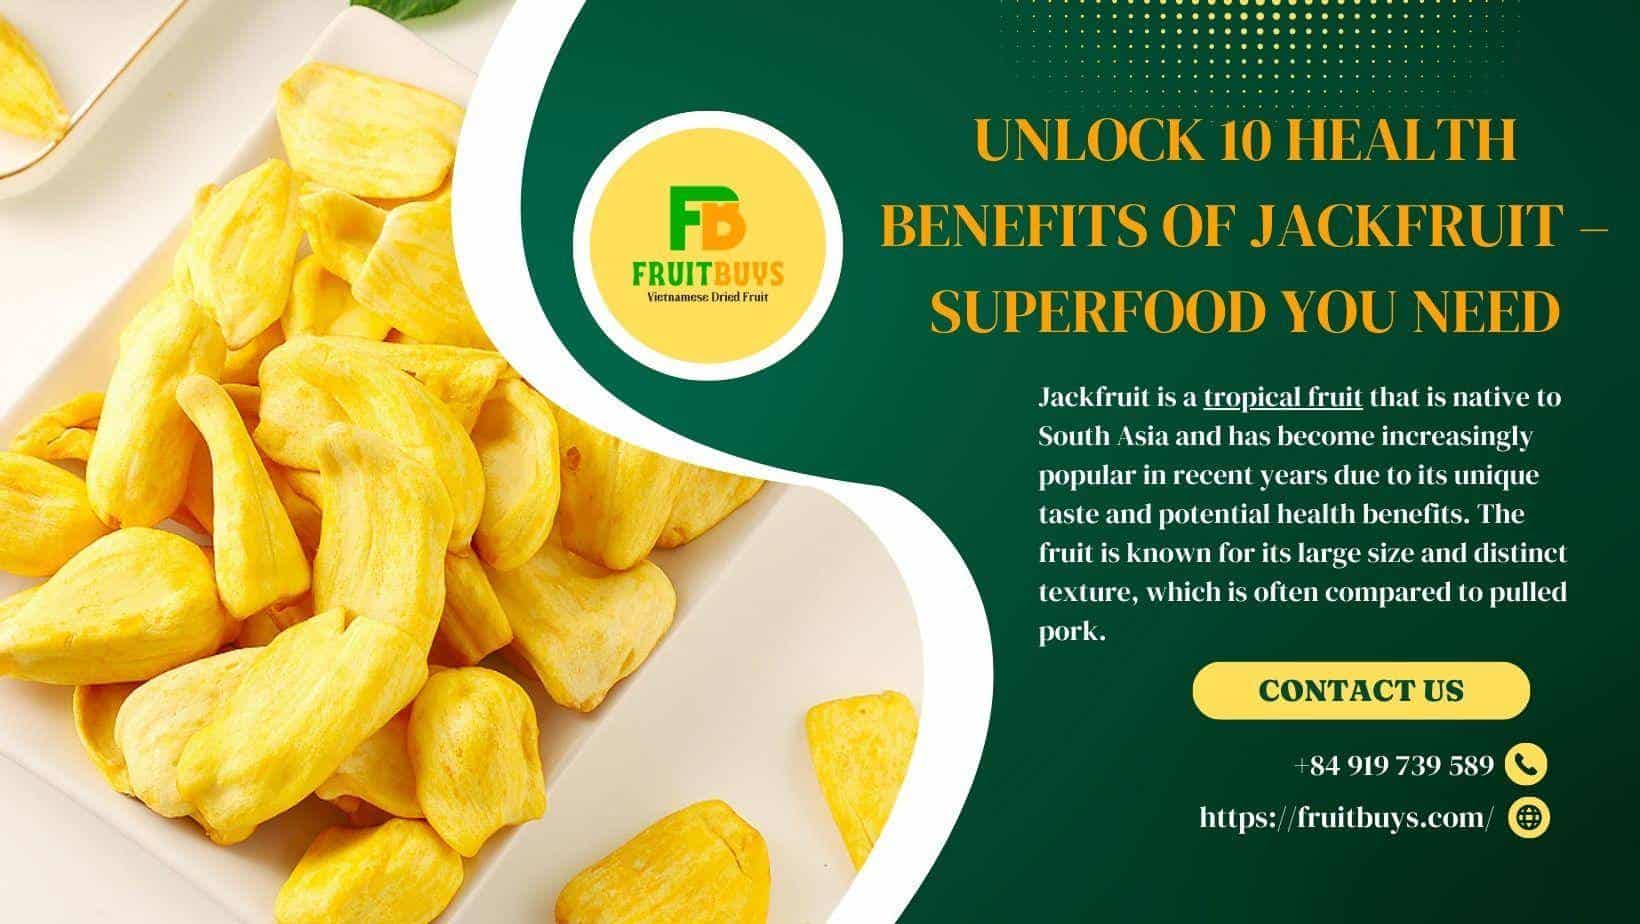 Fruitbuys Vietnam Unlock 10 Health Benefits Of Jackfruit Superfood You Need